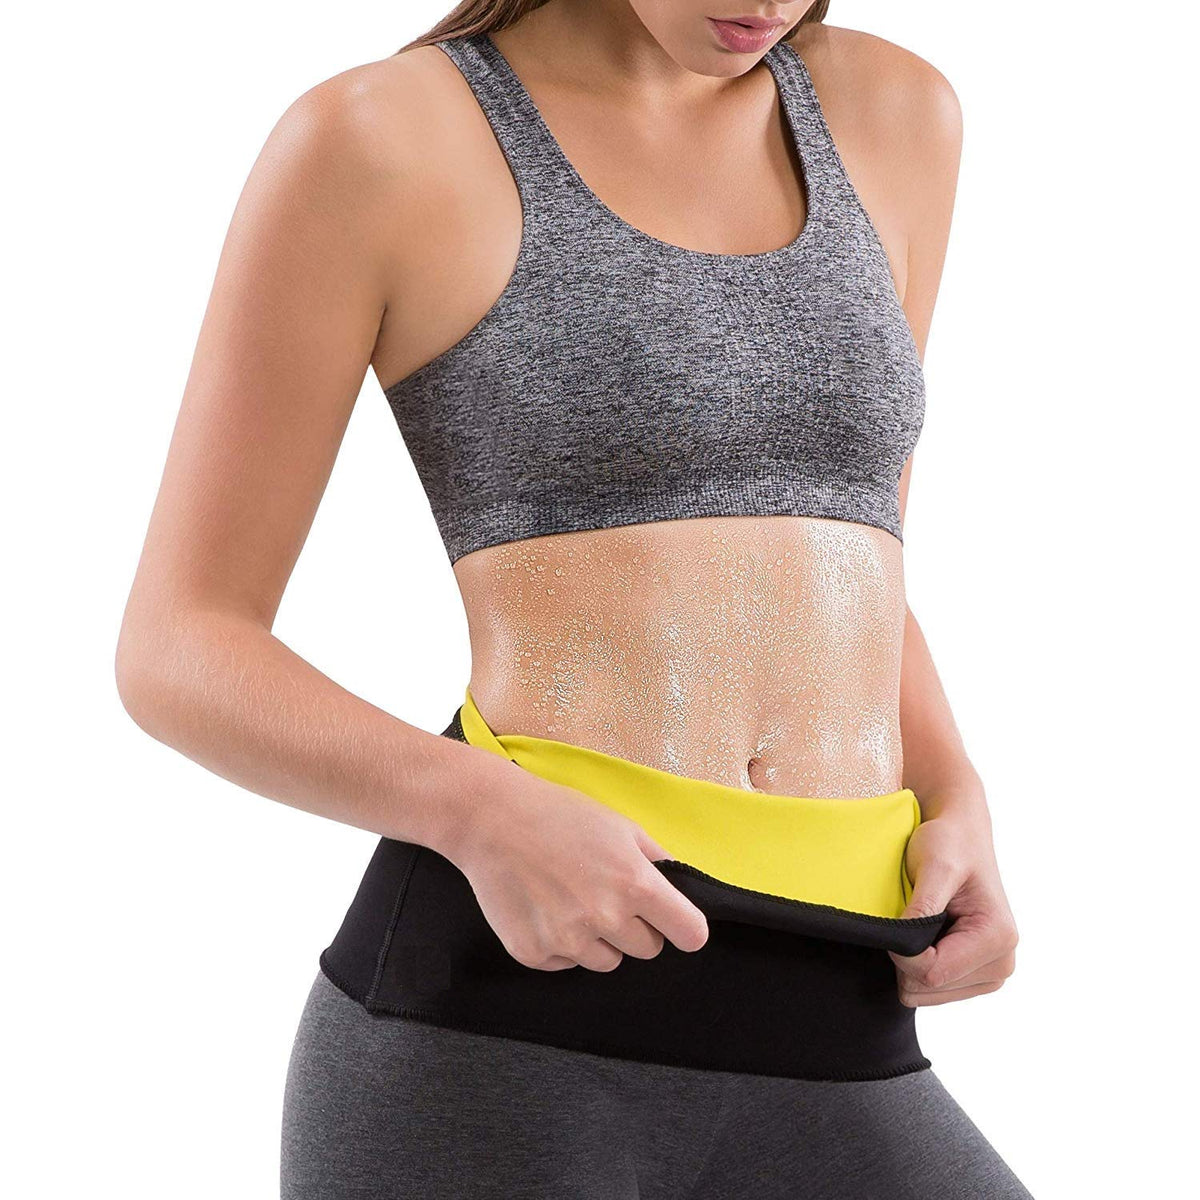 Waist Trainer - Sweat Belt for Stomach Workout